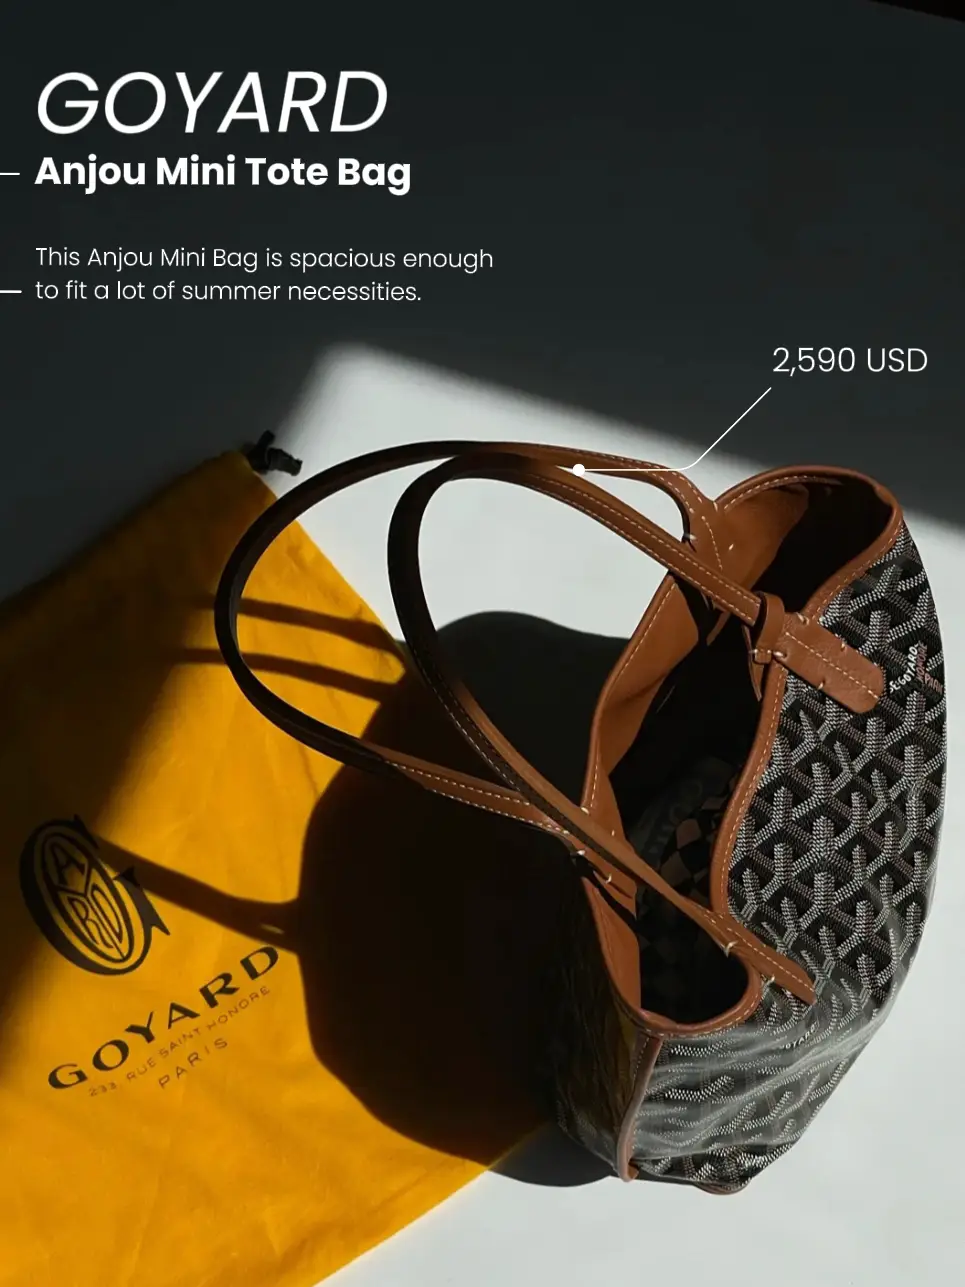 Goyard Anjou Mini Tote Bag